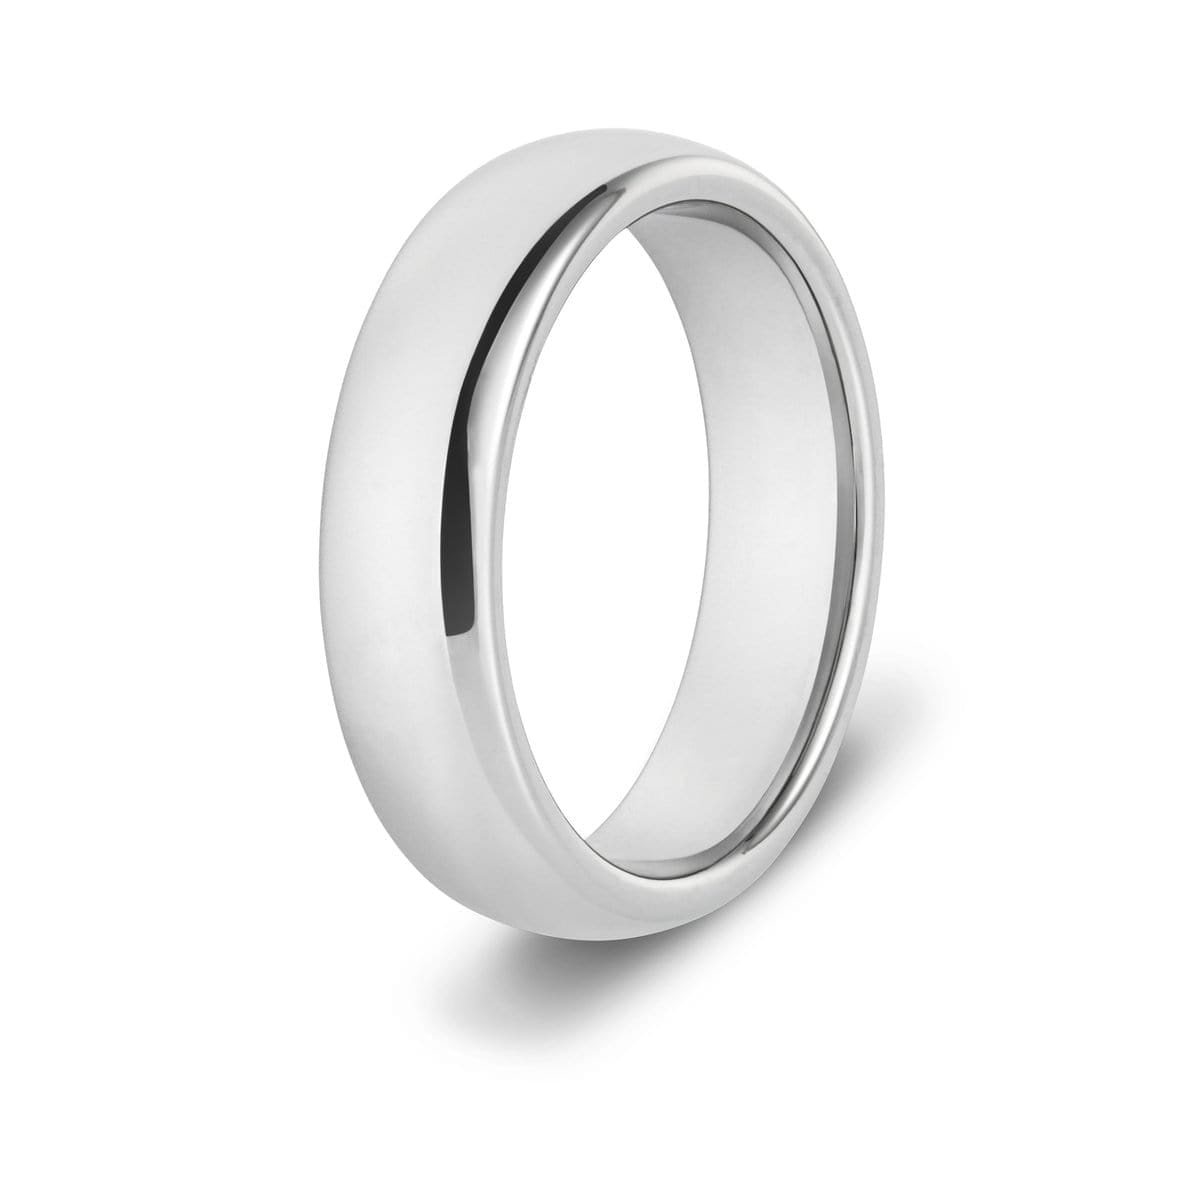 5 Great Benefits of a Titanium ring - ETRNL